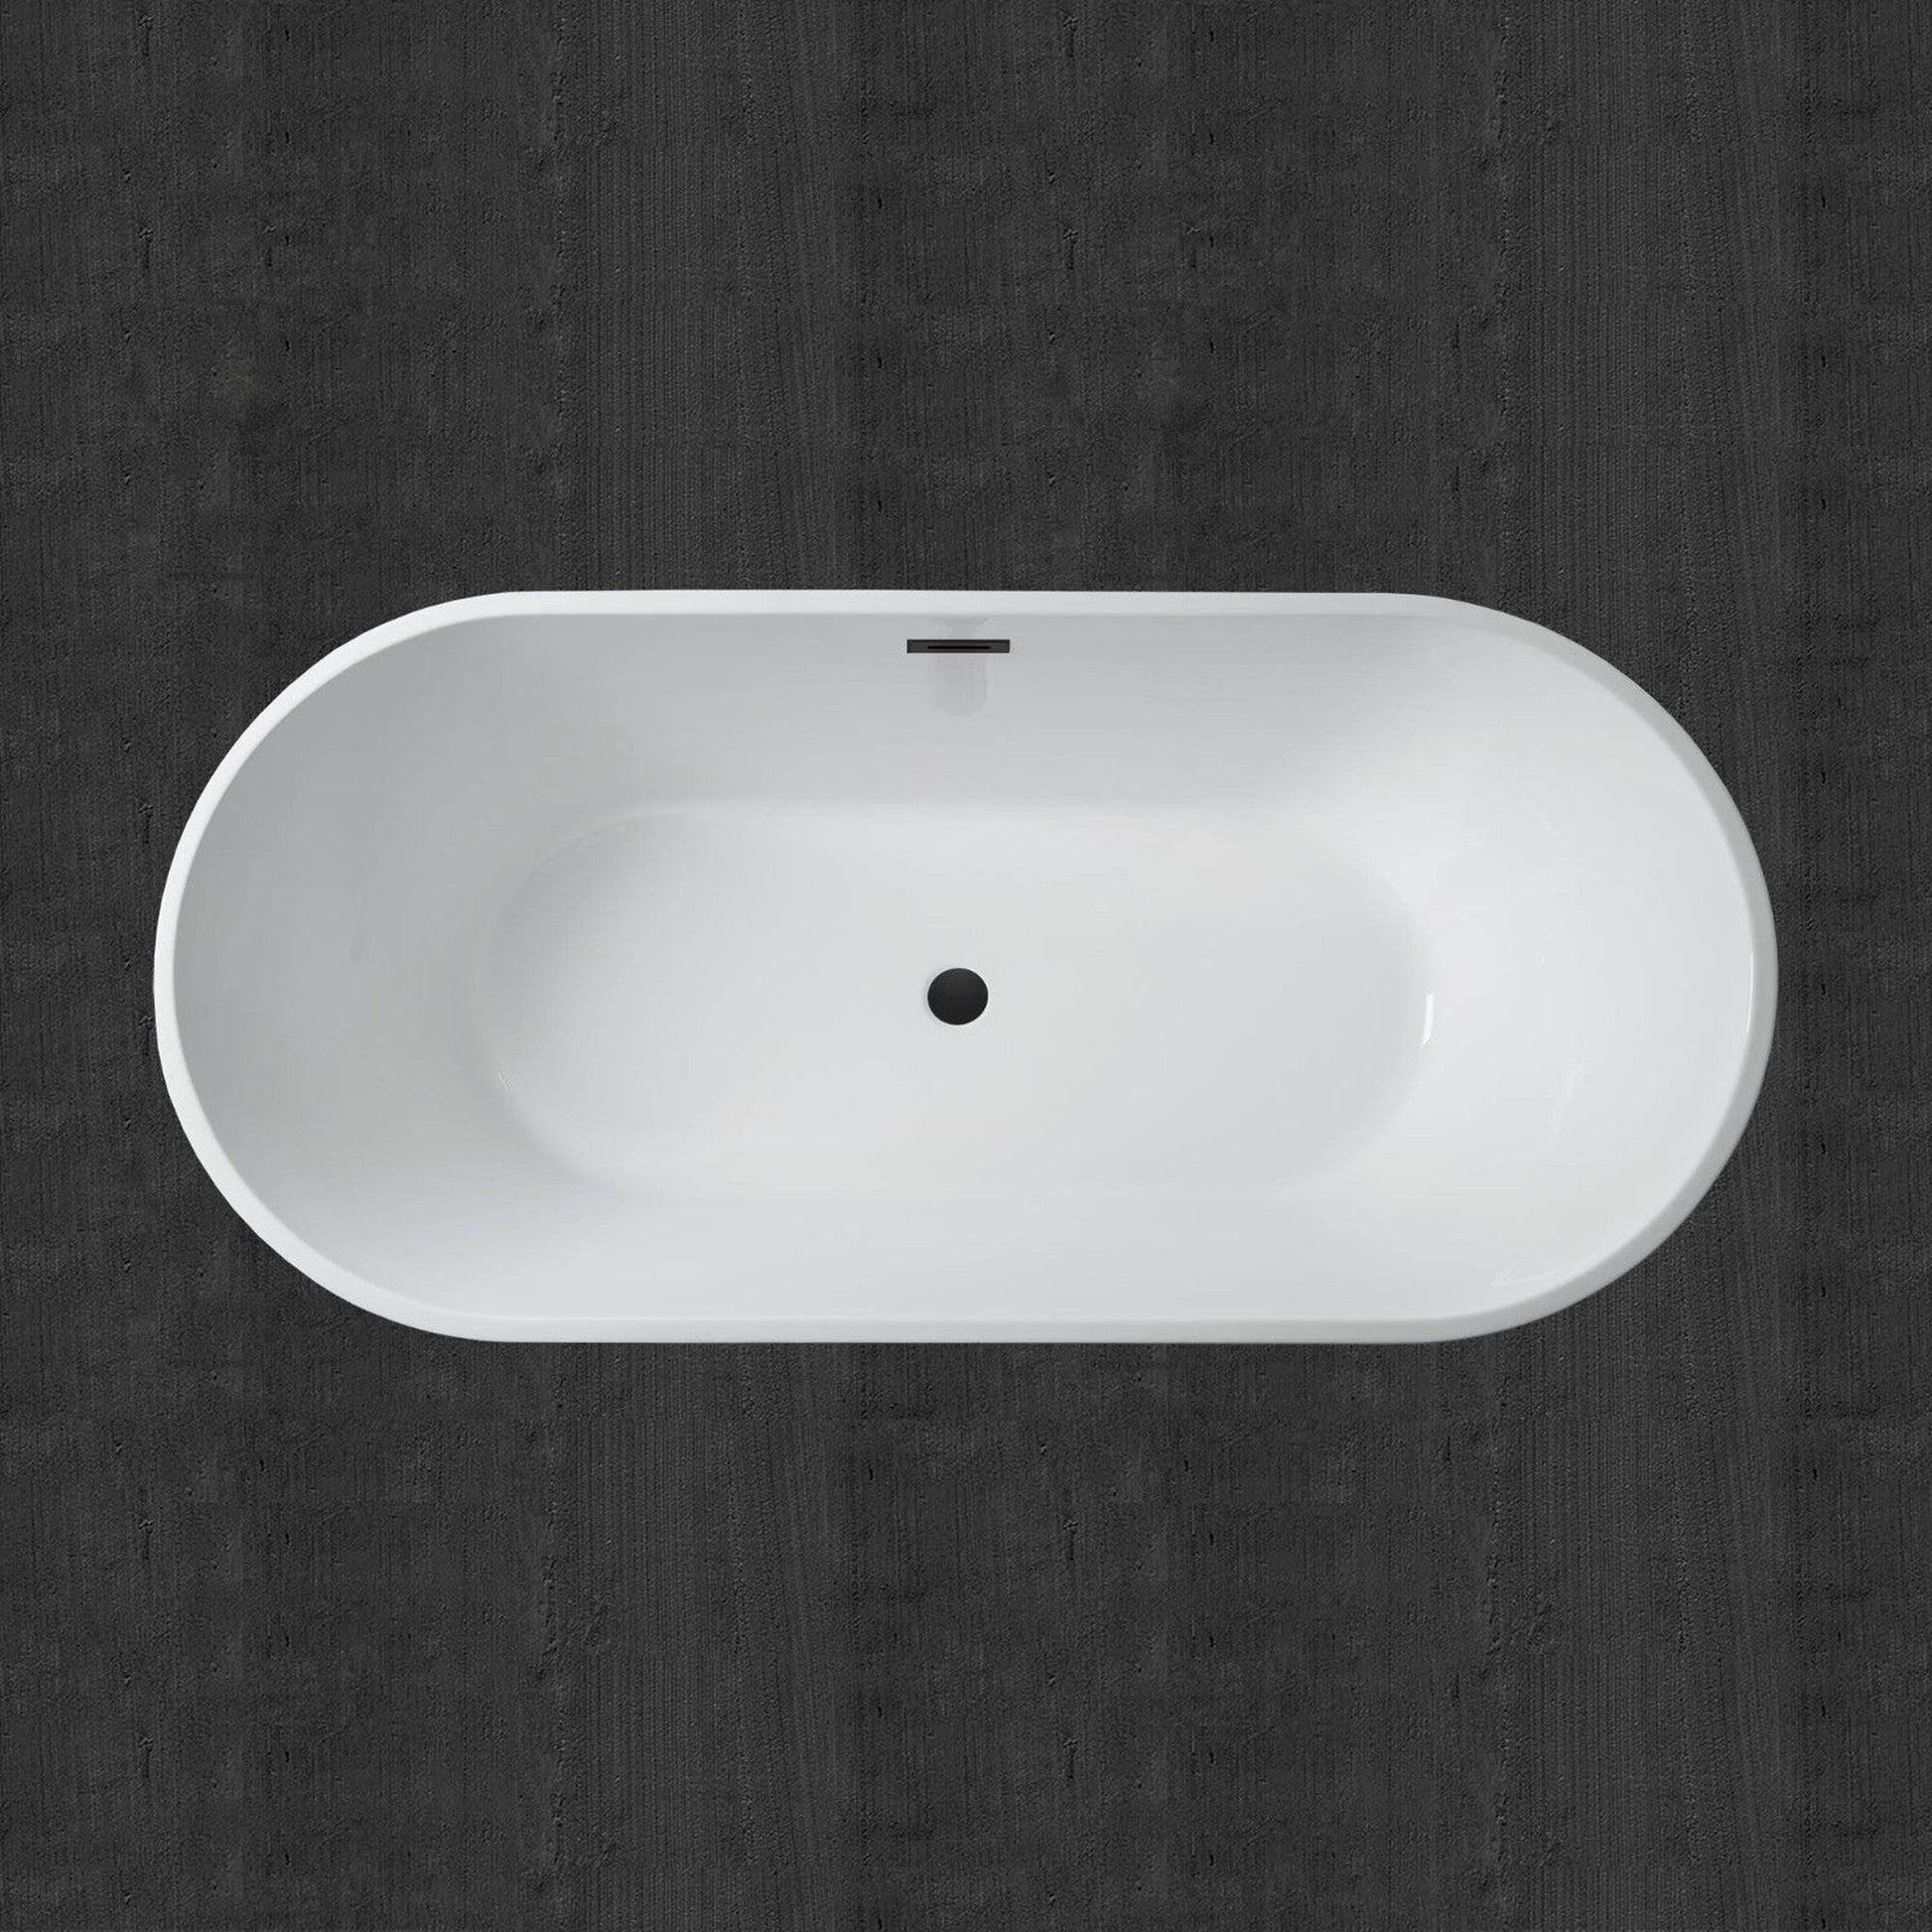 WoodBridge B0014 59" White Acrylic Freestanding Soaking Bathtub With Matte Black Drain, Overflow, F0072MBSQ Tub Filler and Caddy Tray